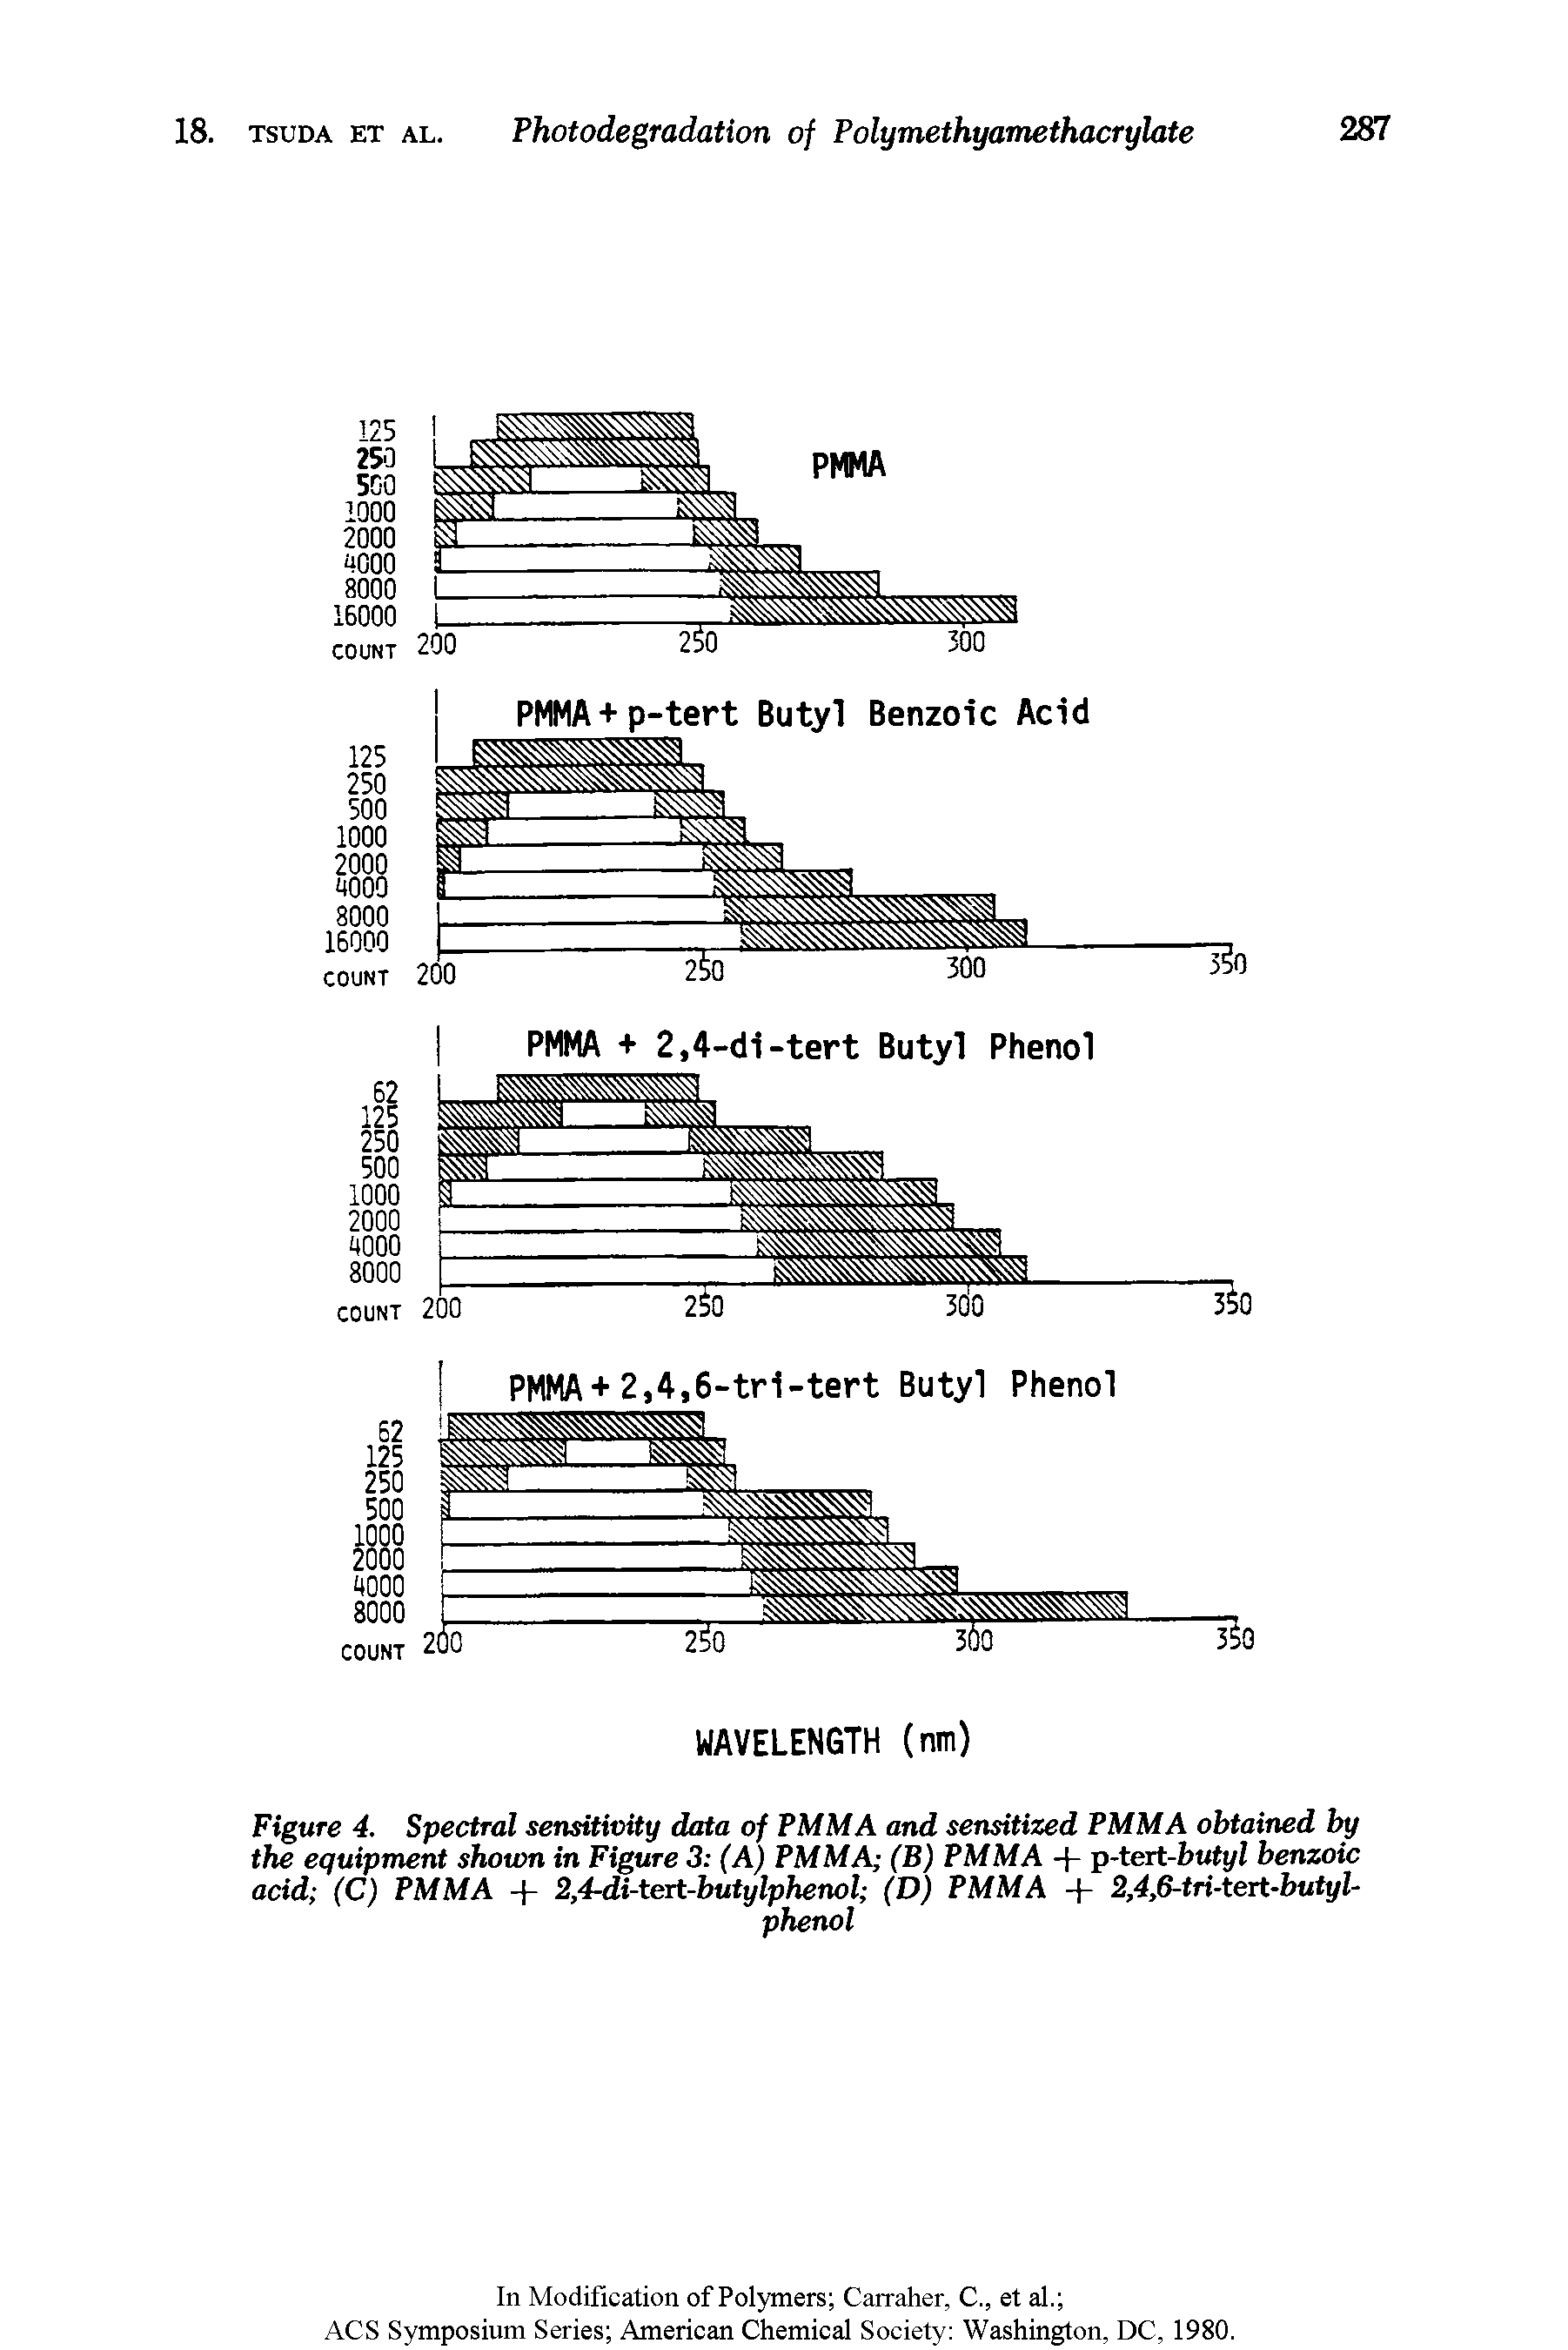 Figure 4. Spectral sensitivity data of PMMA and sensitized PMMA obtained by the equipment shown in Figure 3 (A) PMMA (B) PMMA -f- p-teit-butyl benzoic acid (C) PMMA + 2,4-di-tert-butylphenol (D) PMMA + 2,4,6-tri-teit-butyl-...